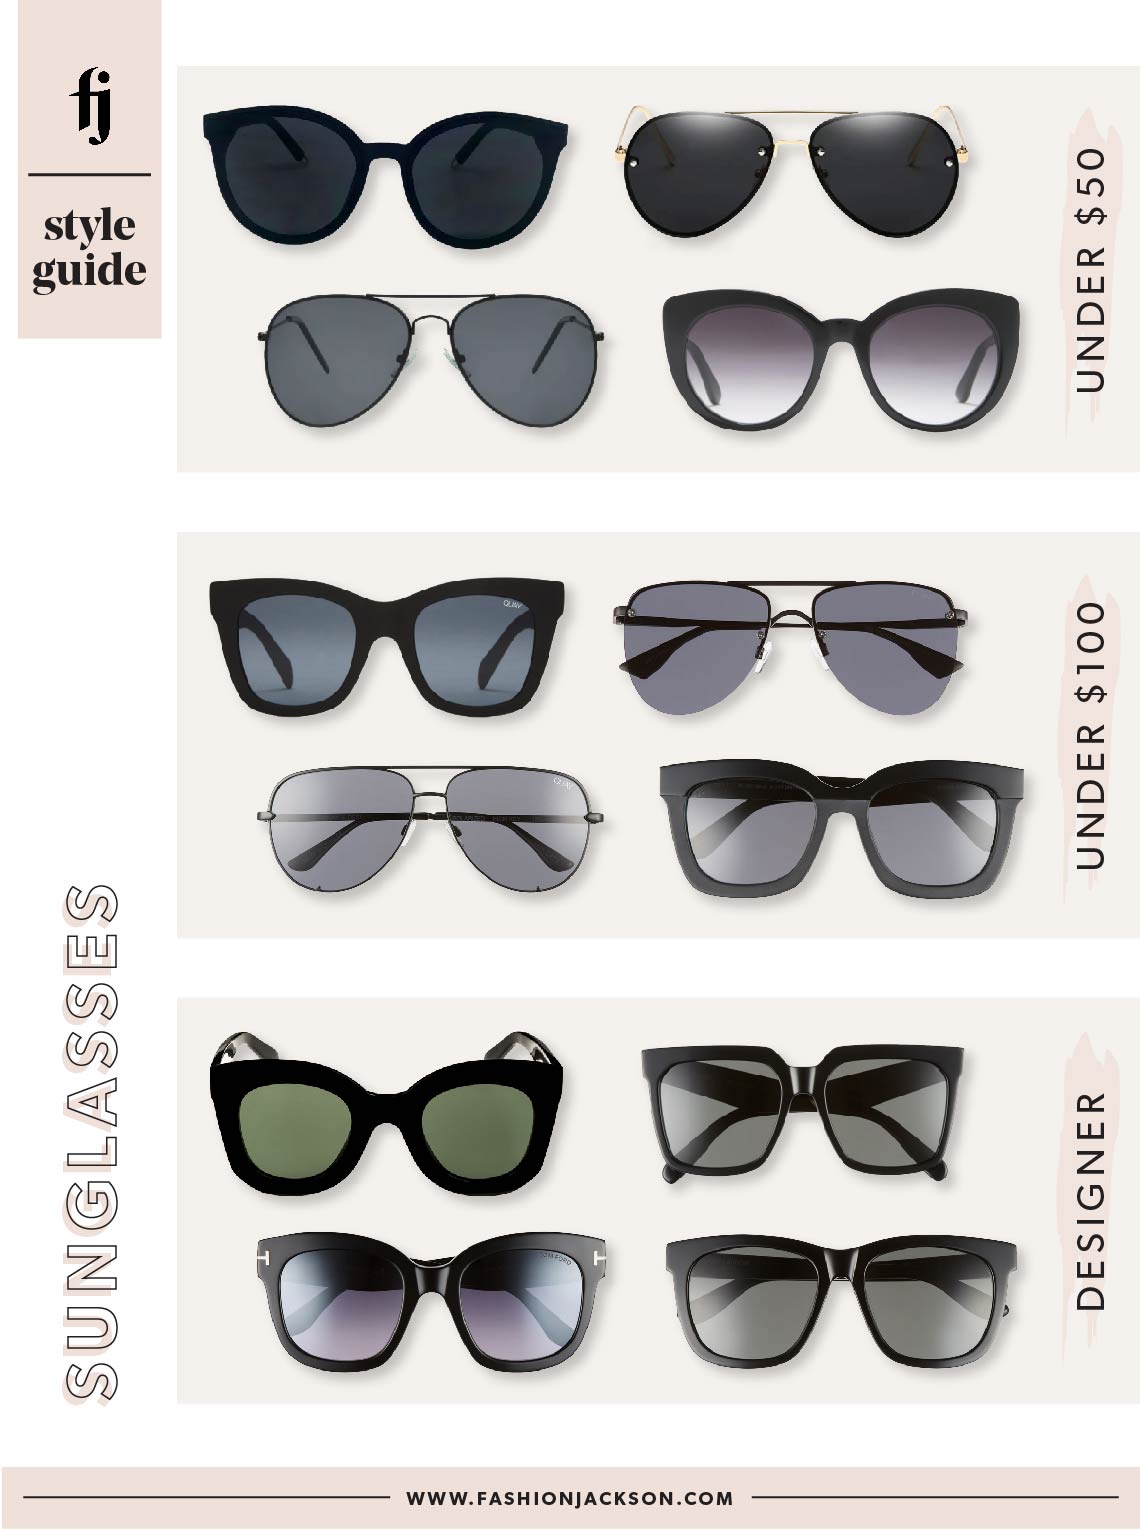 Fashion Jackson Black Sunglasses Guide